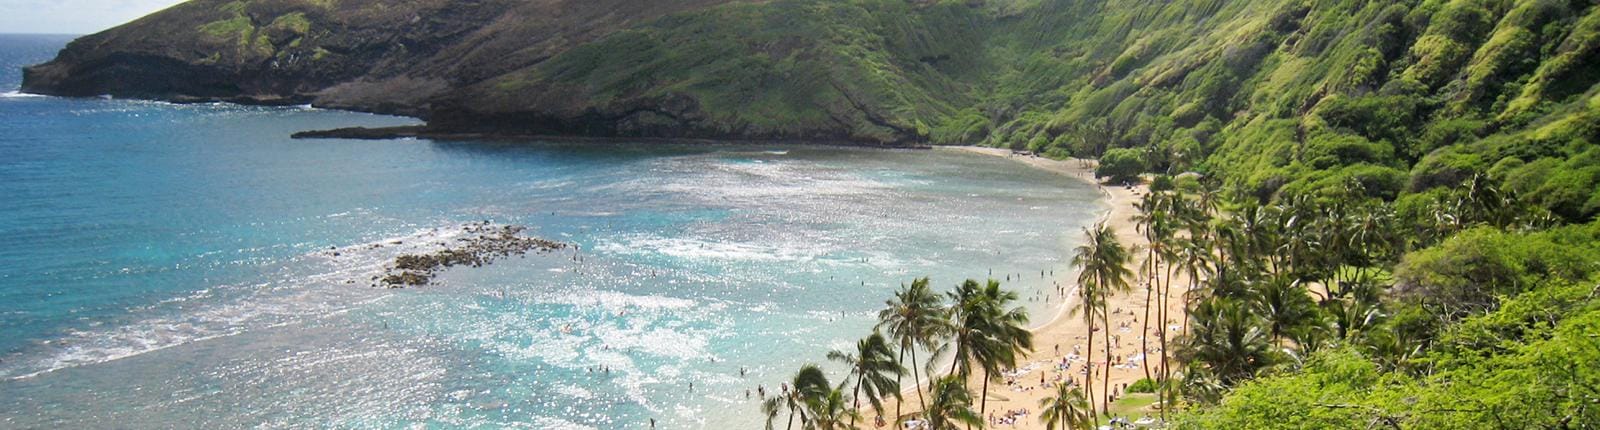 Coastal view of a beach in Honolulu, Hawaii